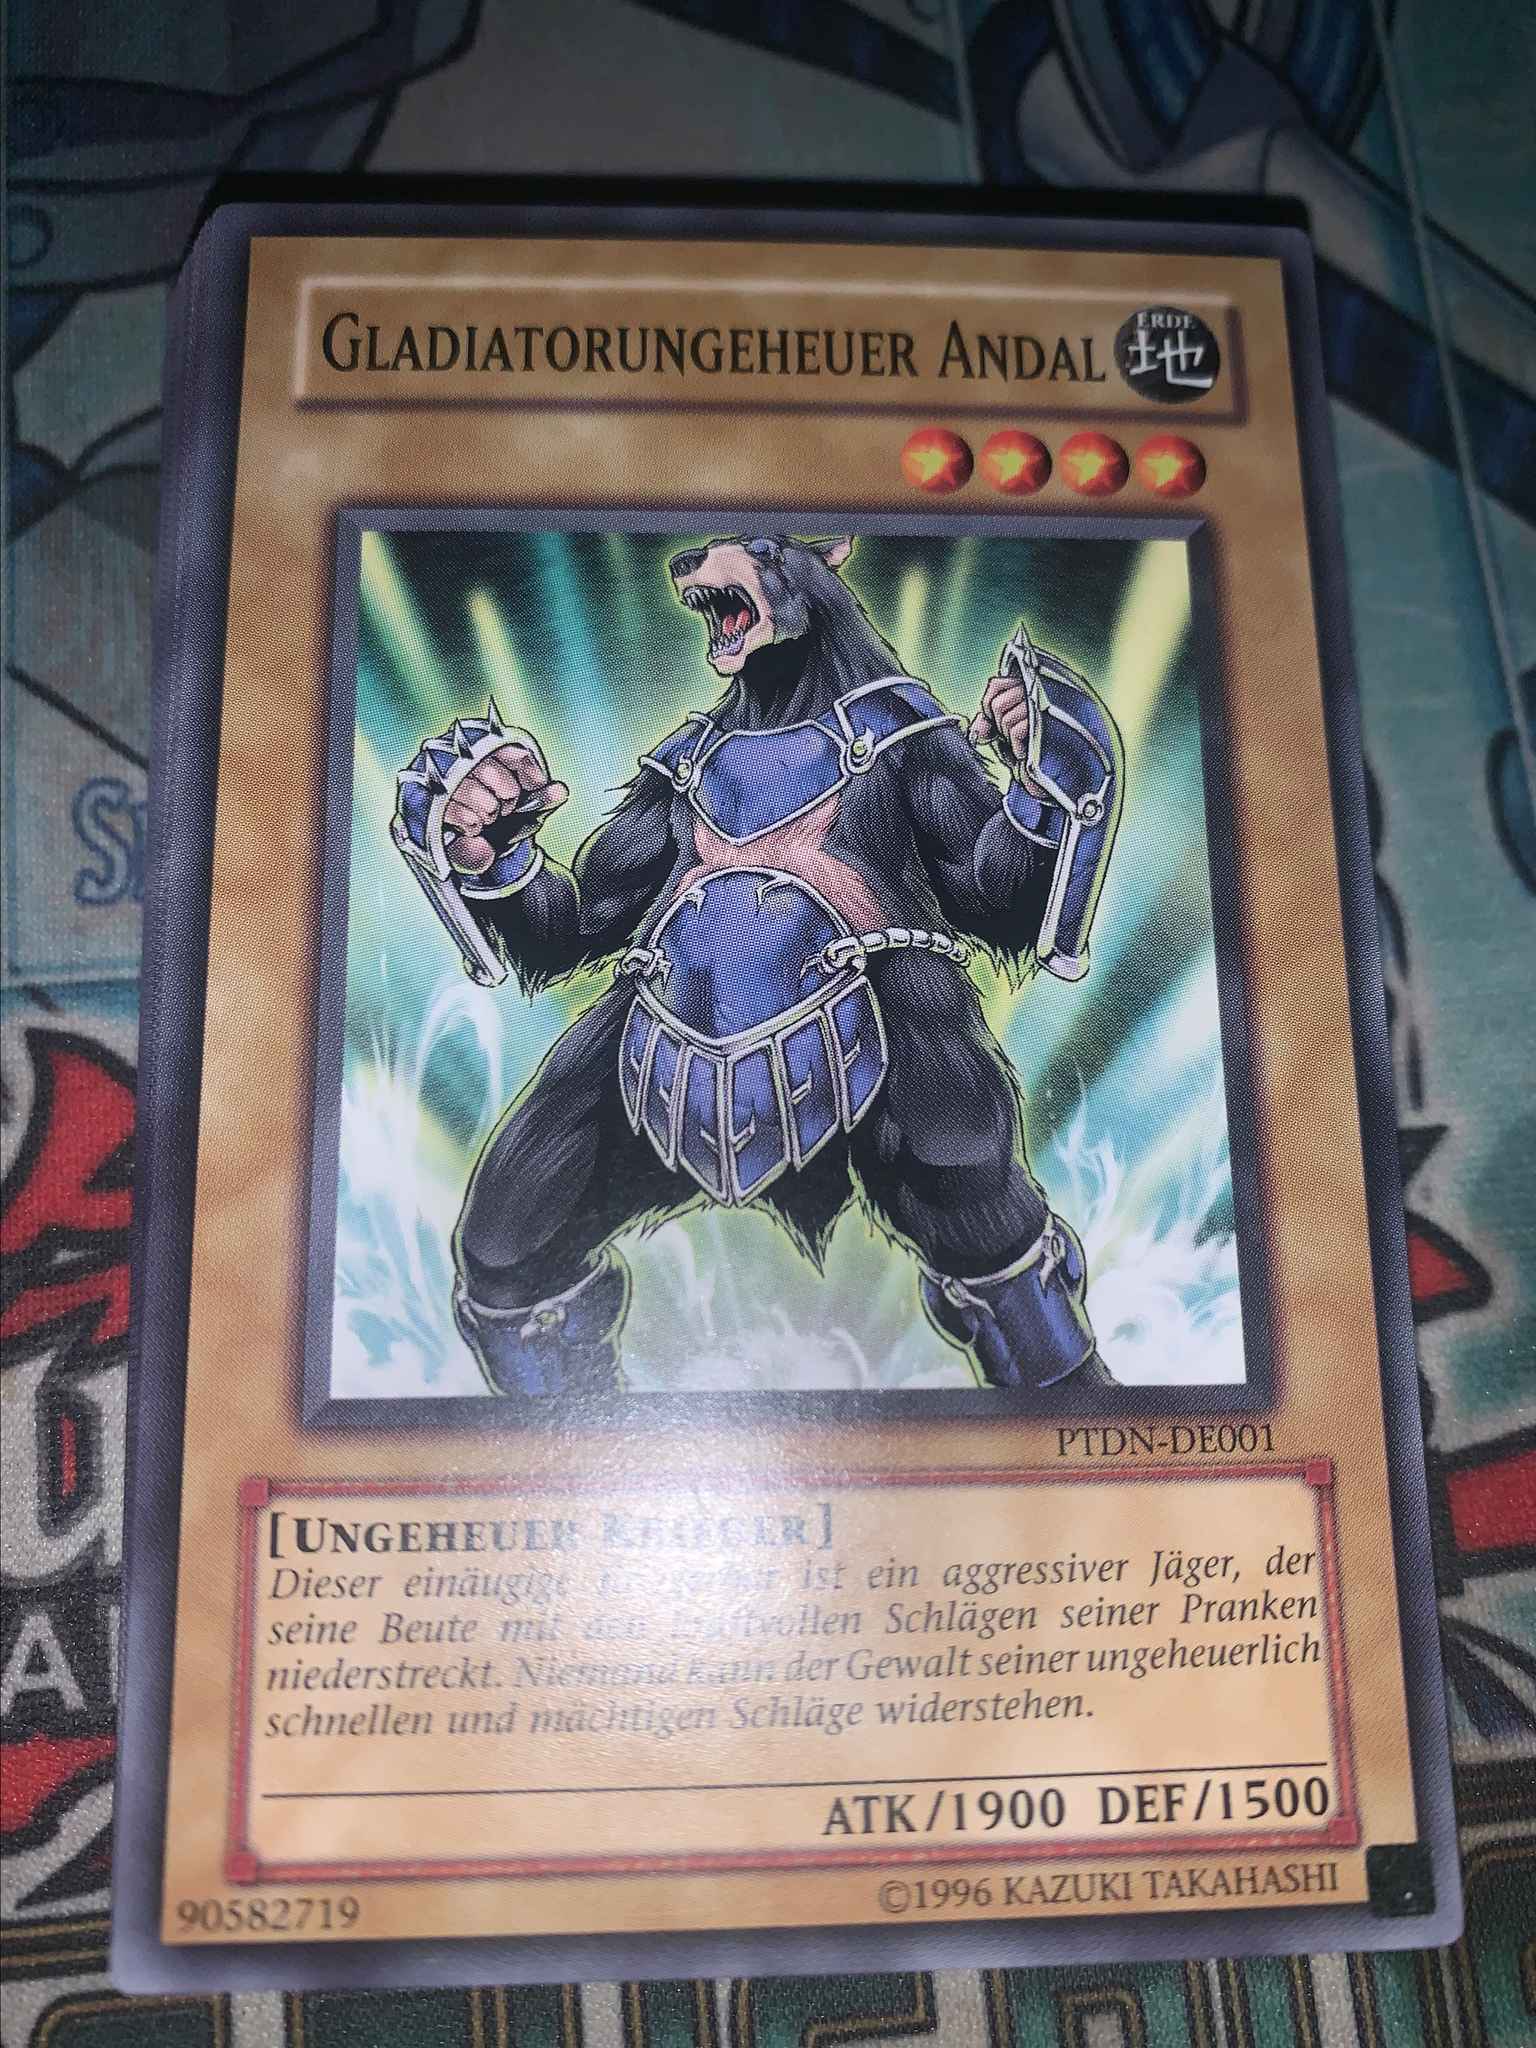 Gladiator Beast Andal PTDN-EN001 Common Yu-Gi-Oh Card